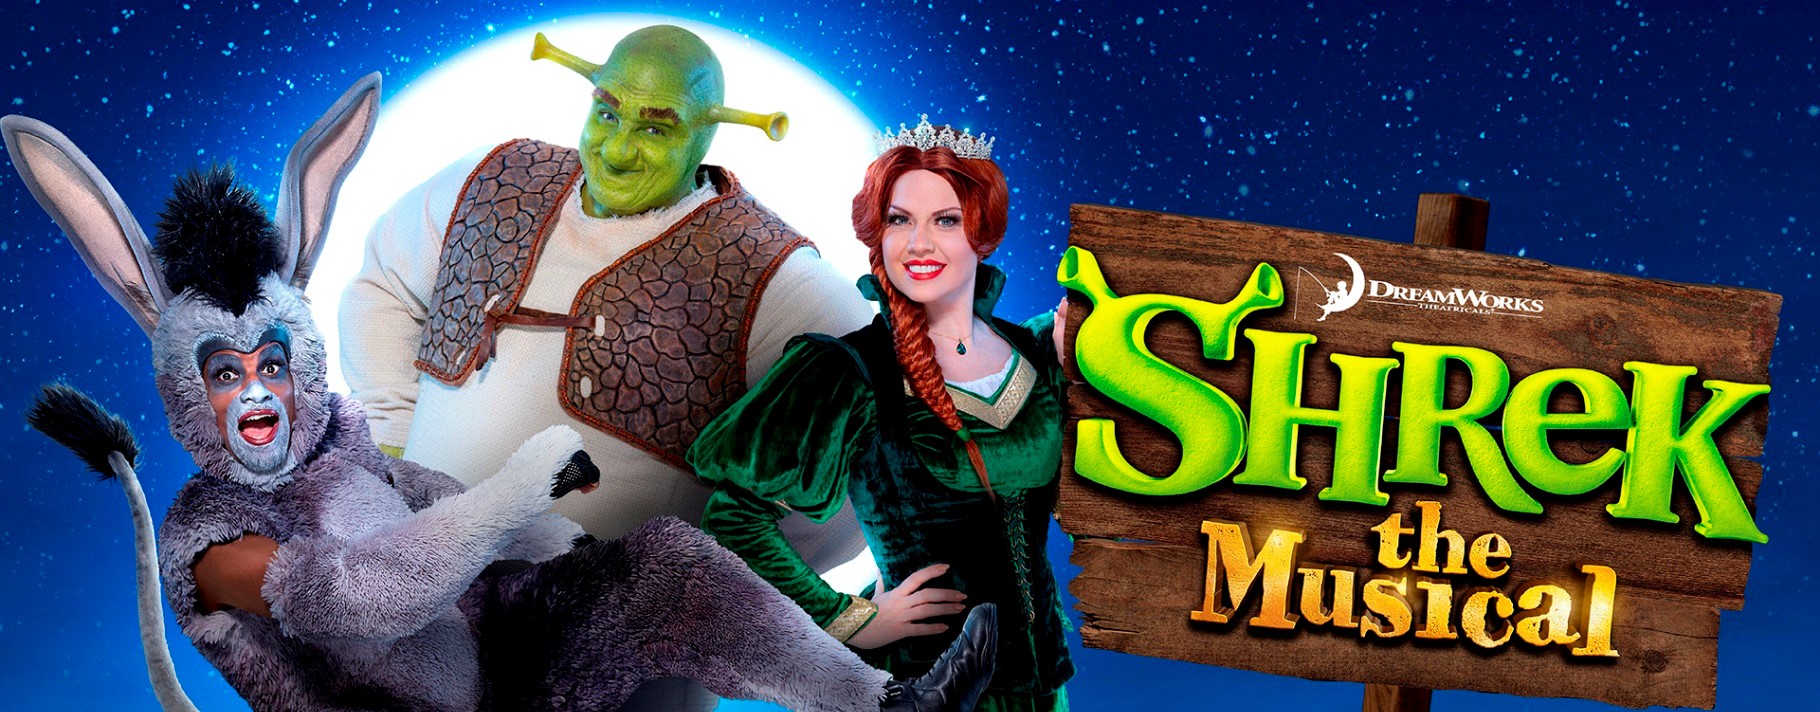 Shrek the musical στο θέατρο Περοκέ | Σάββατο 2 Μαρτίου